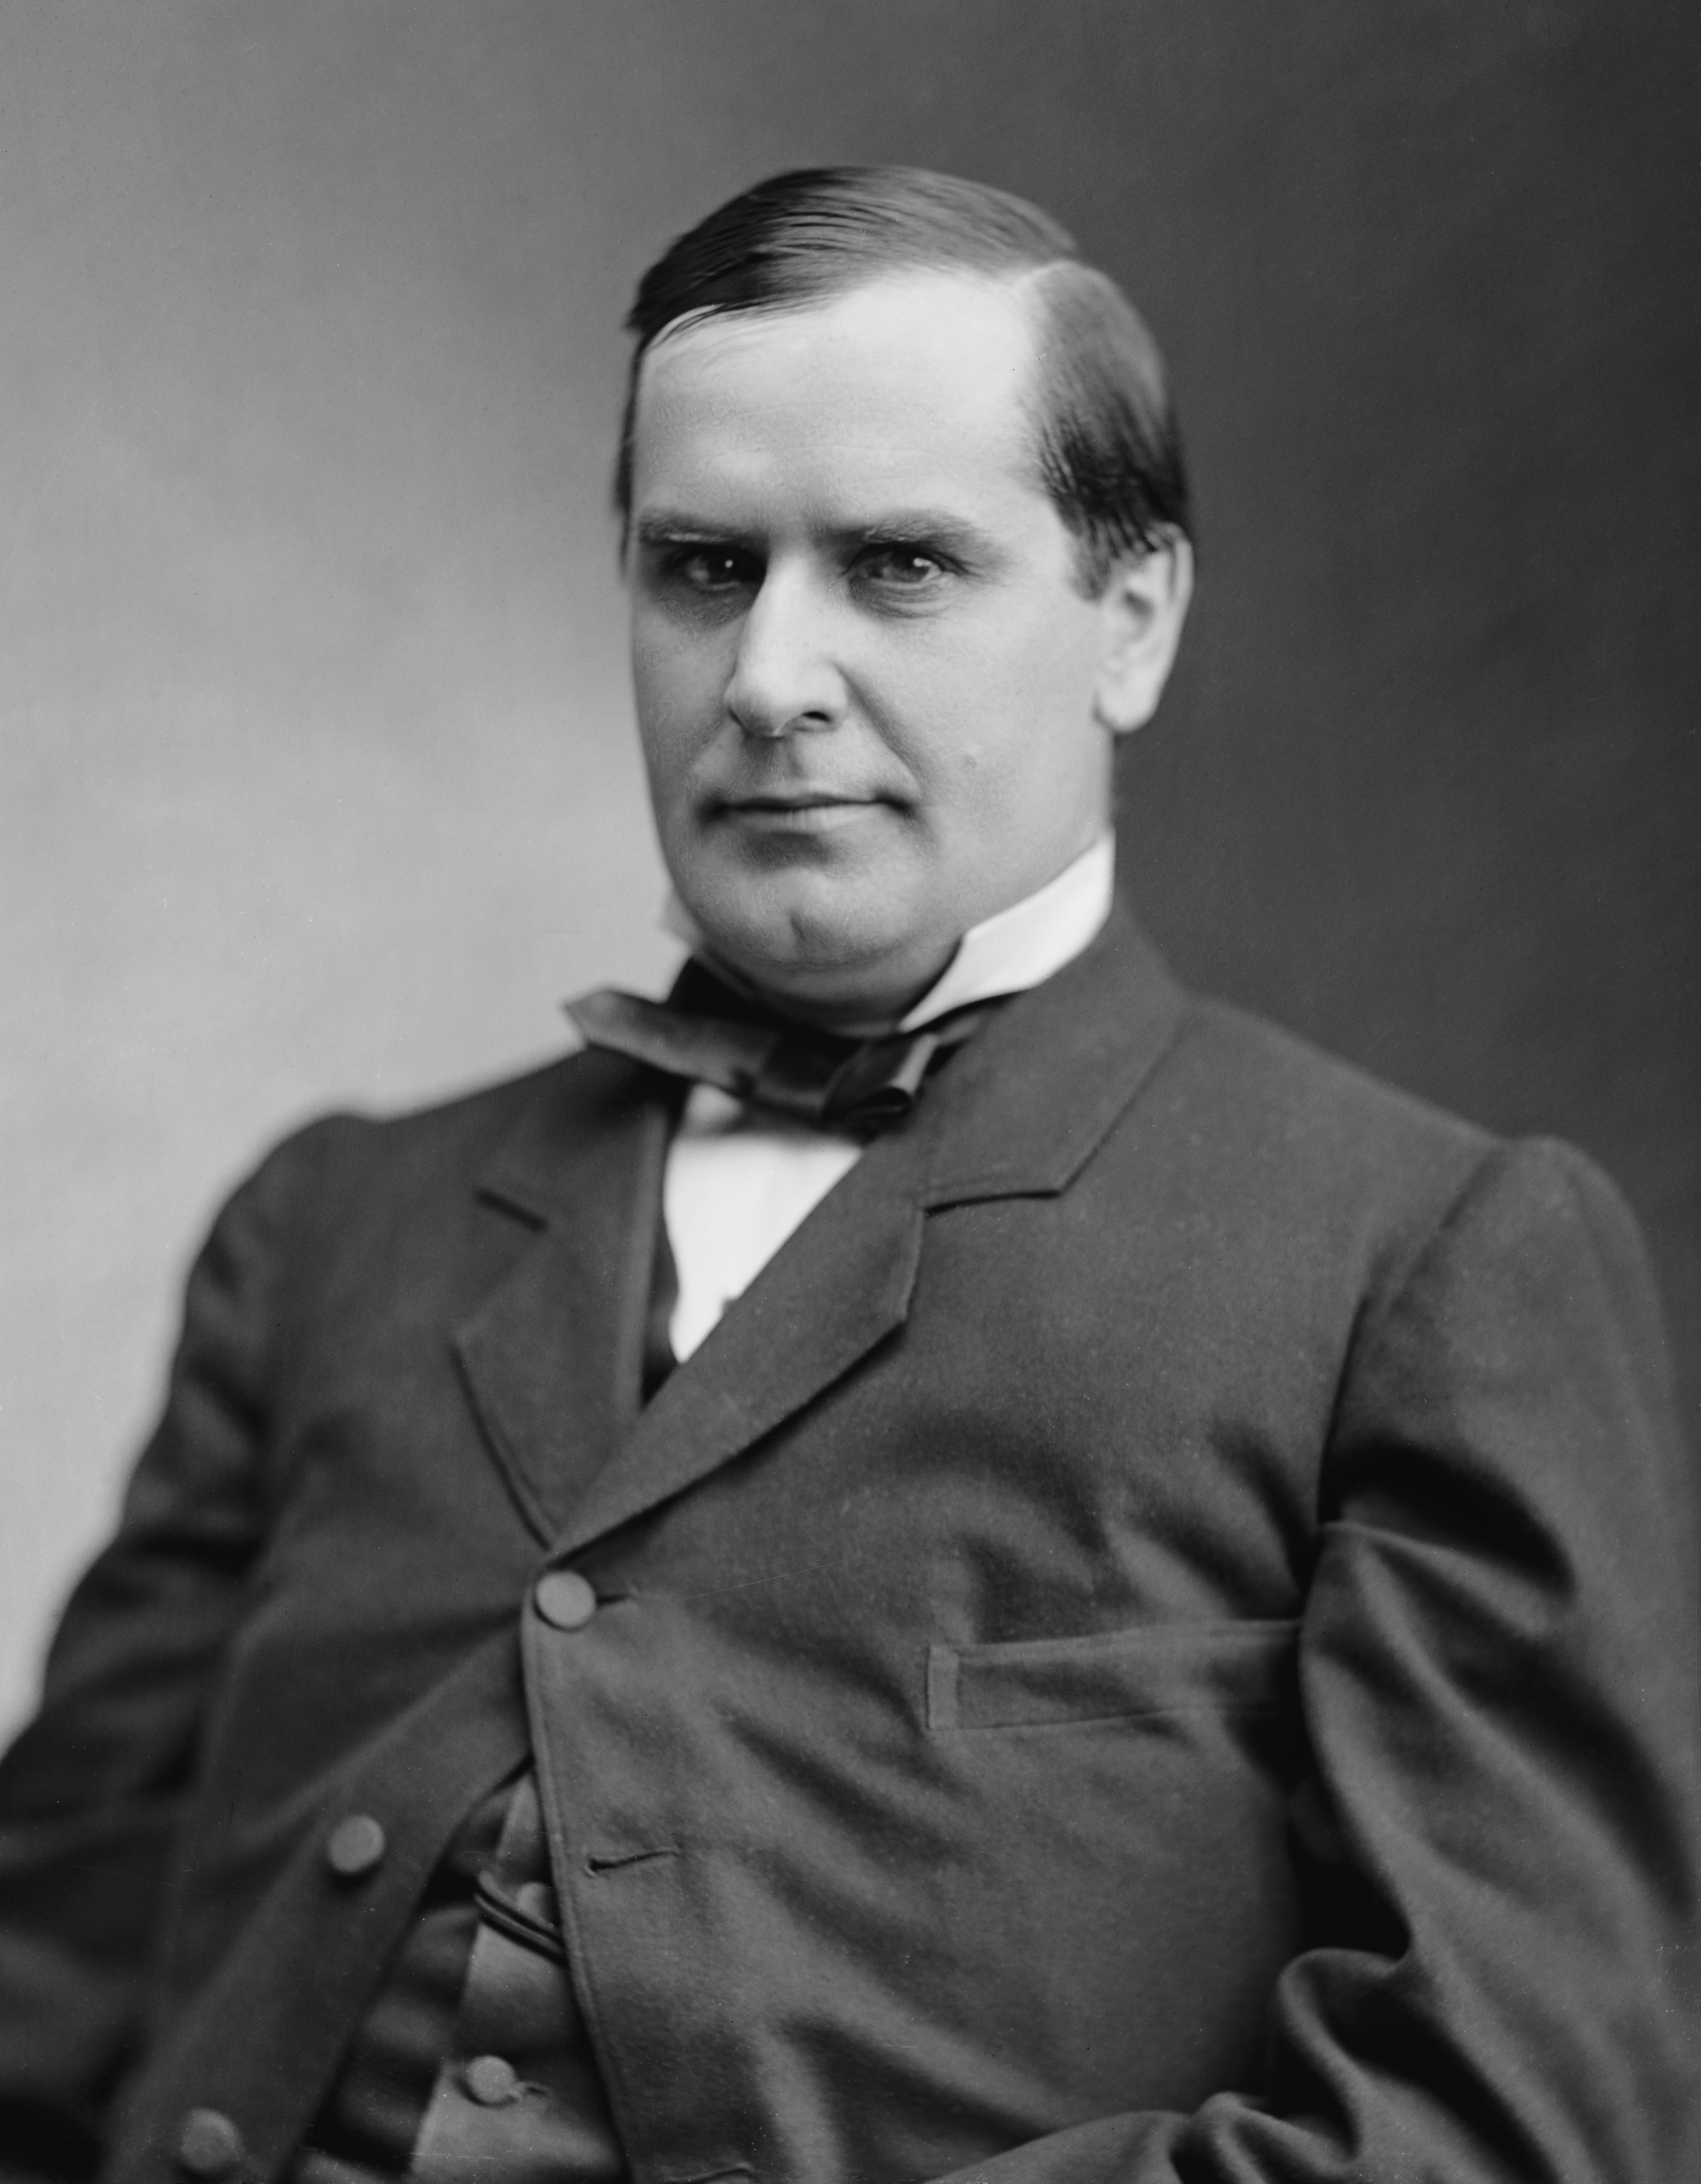 Representative William McKinley, photographed between 1870 and 1880